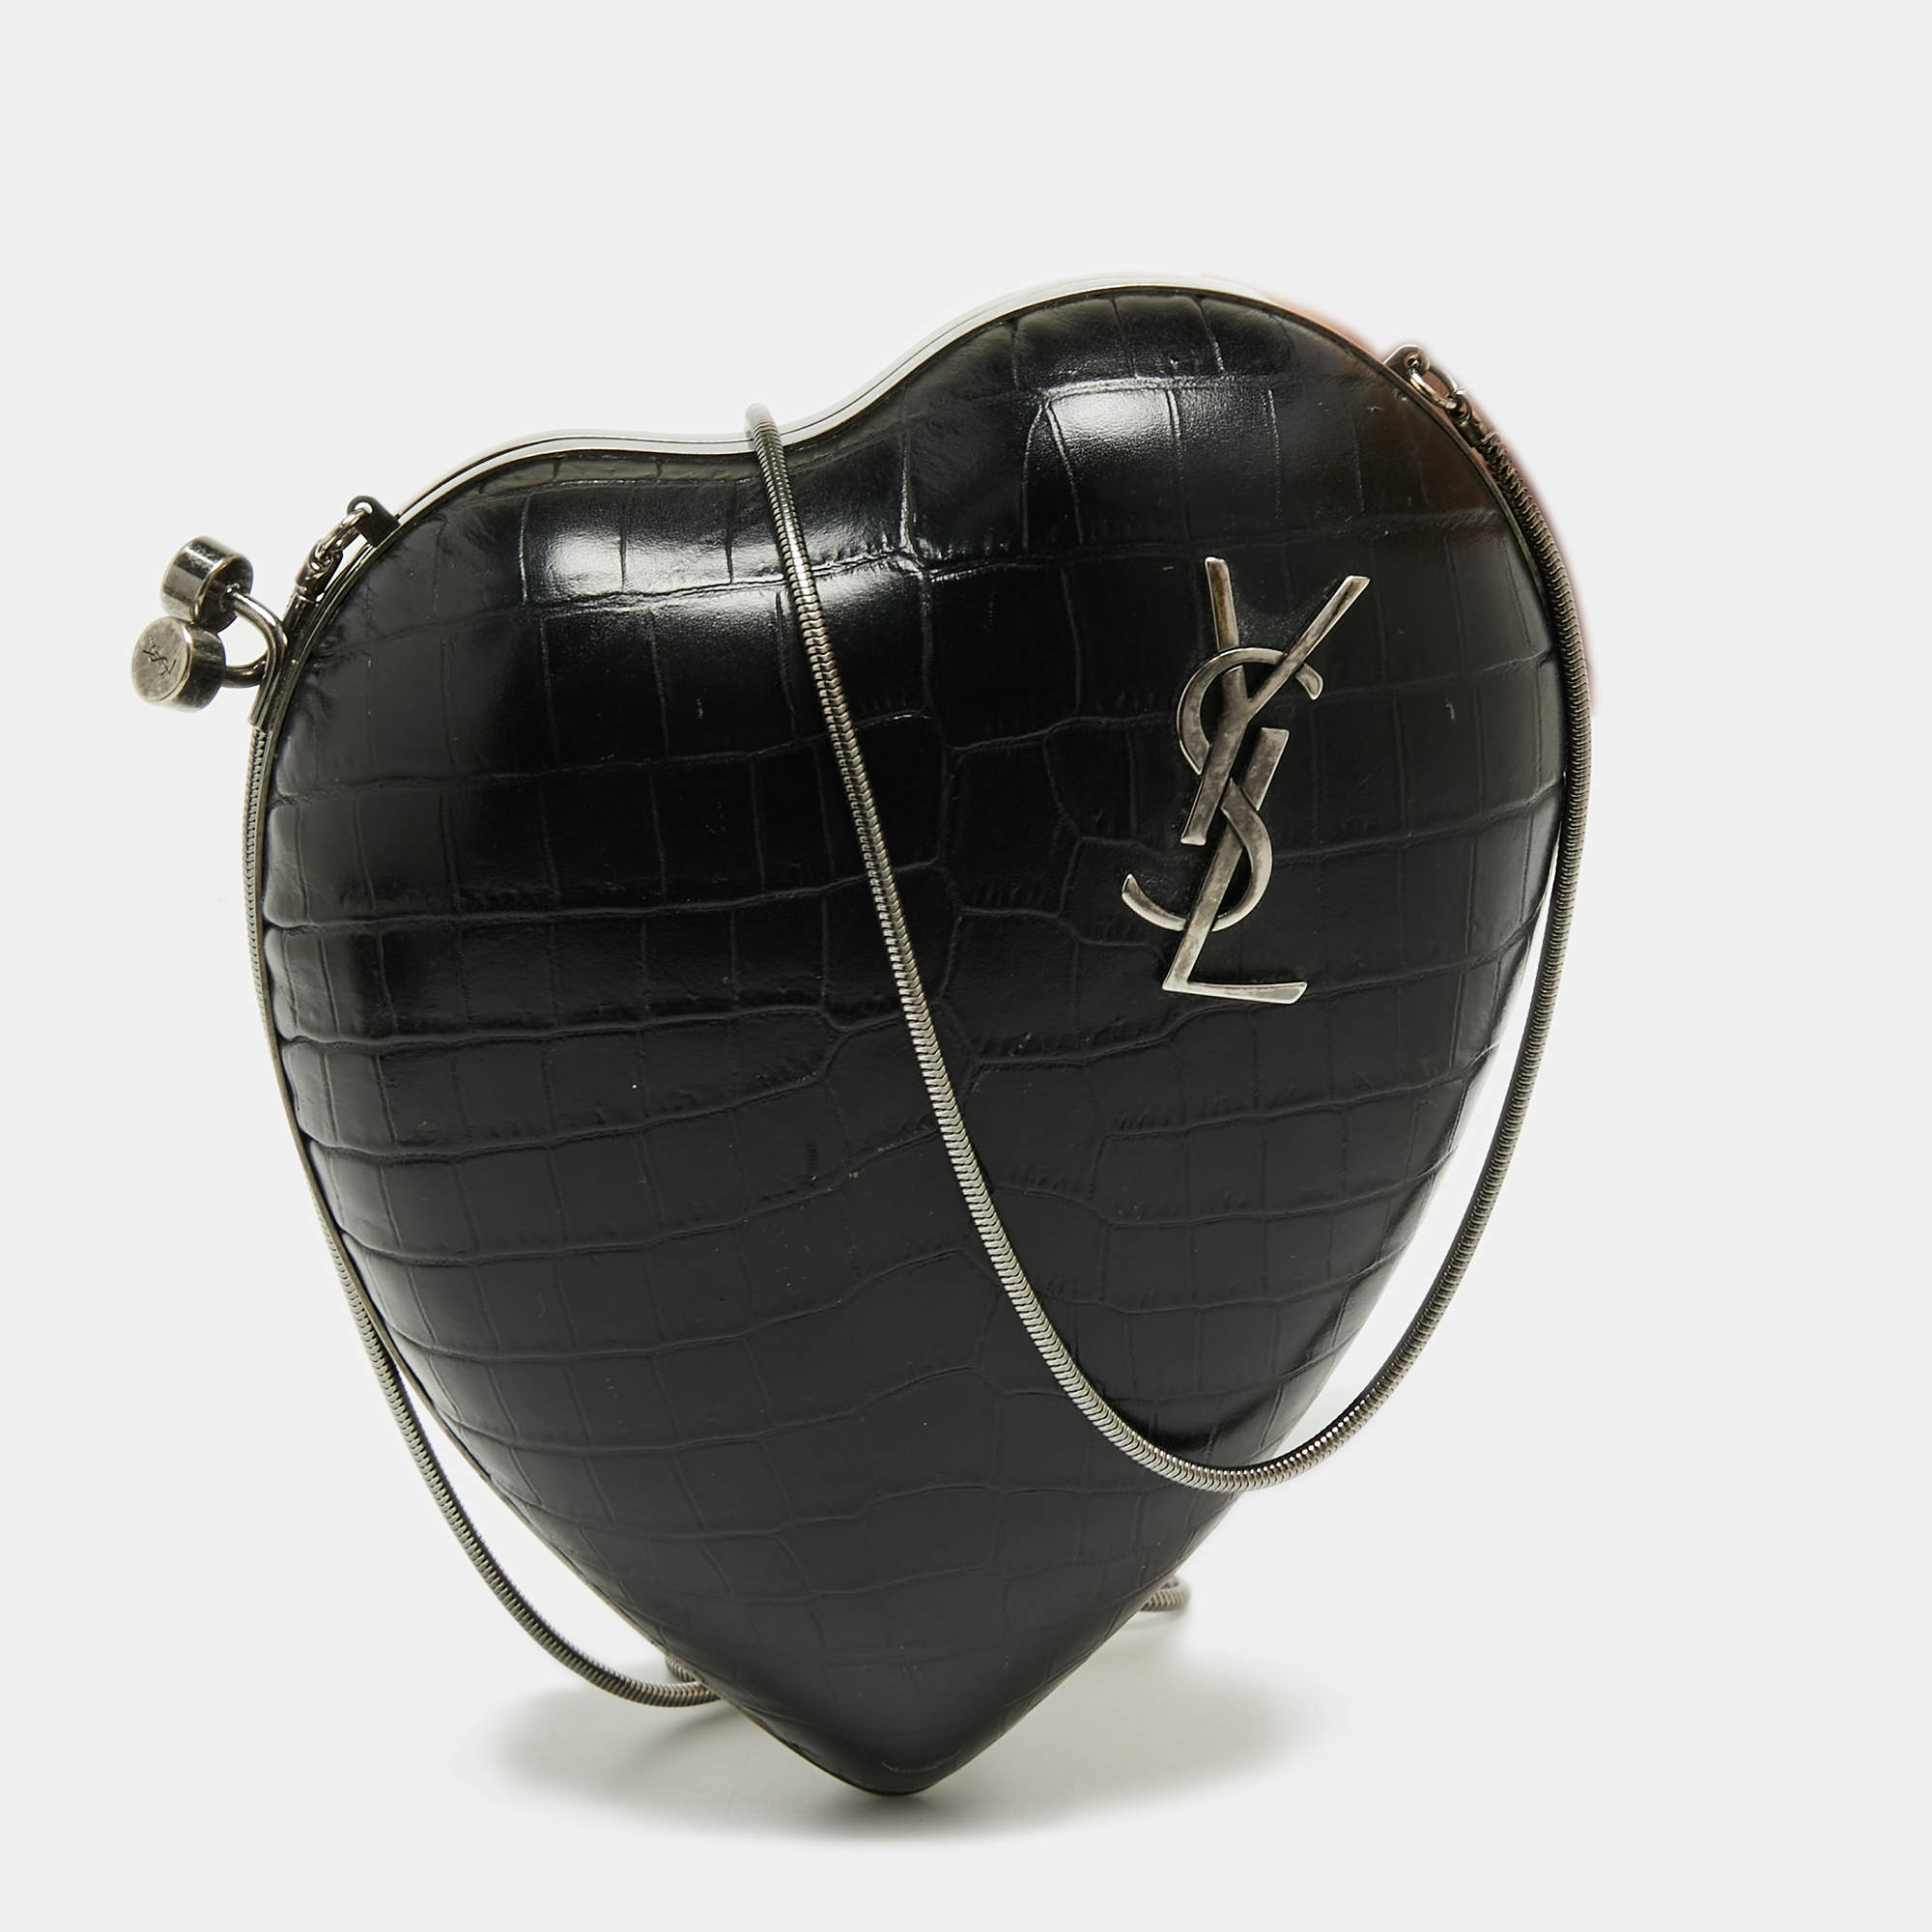 YSL heart bag